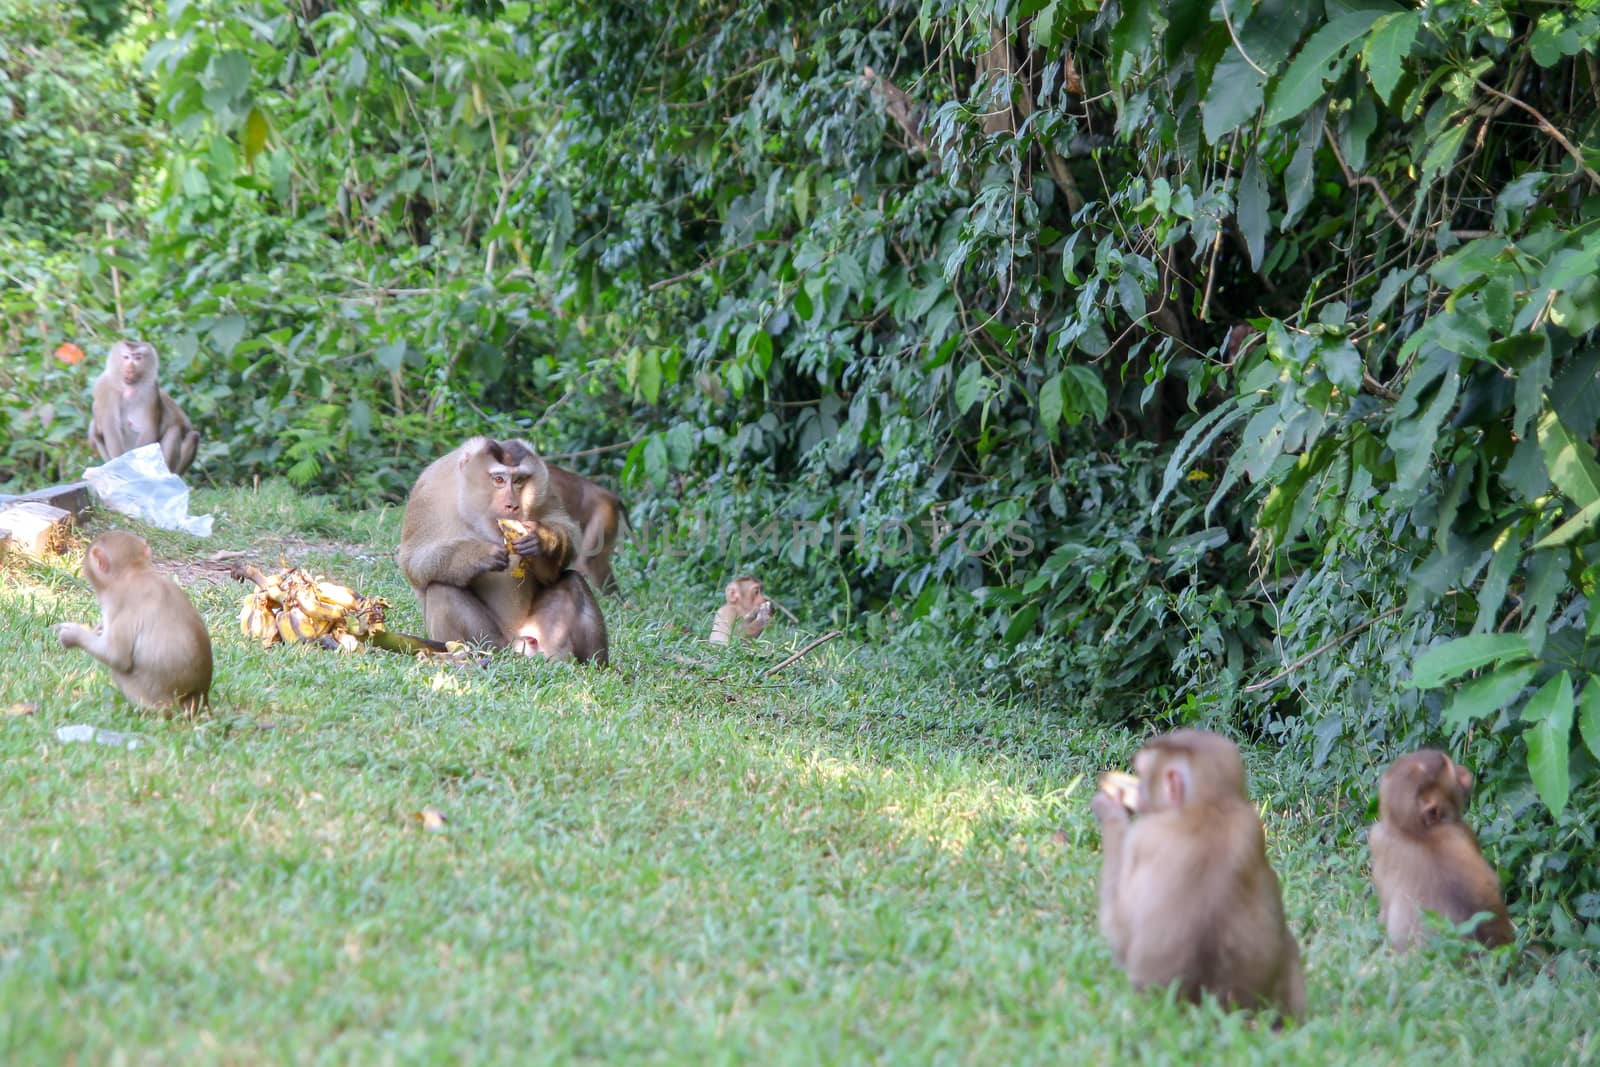 Big monkey eat banana at center group  by pumppump